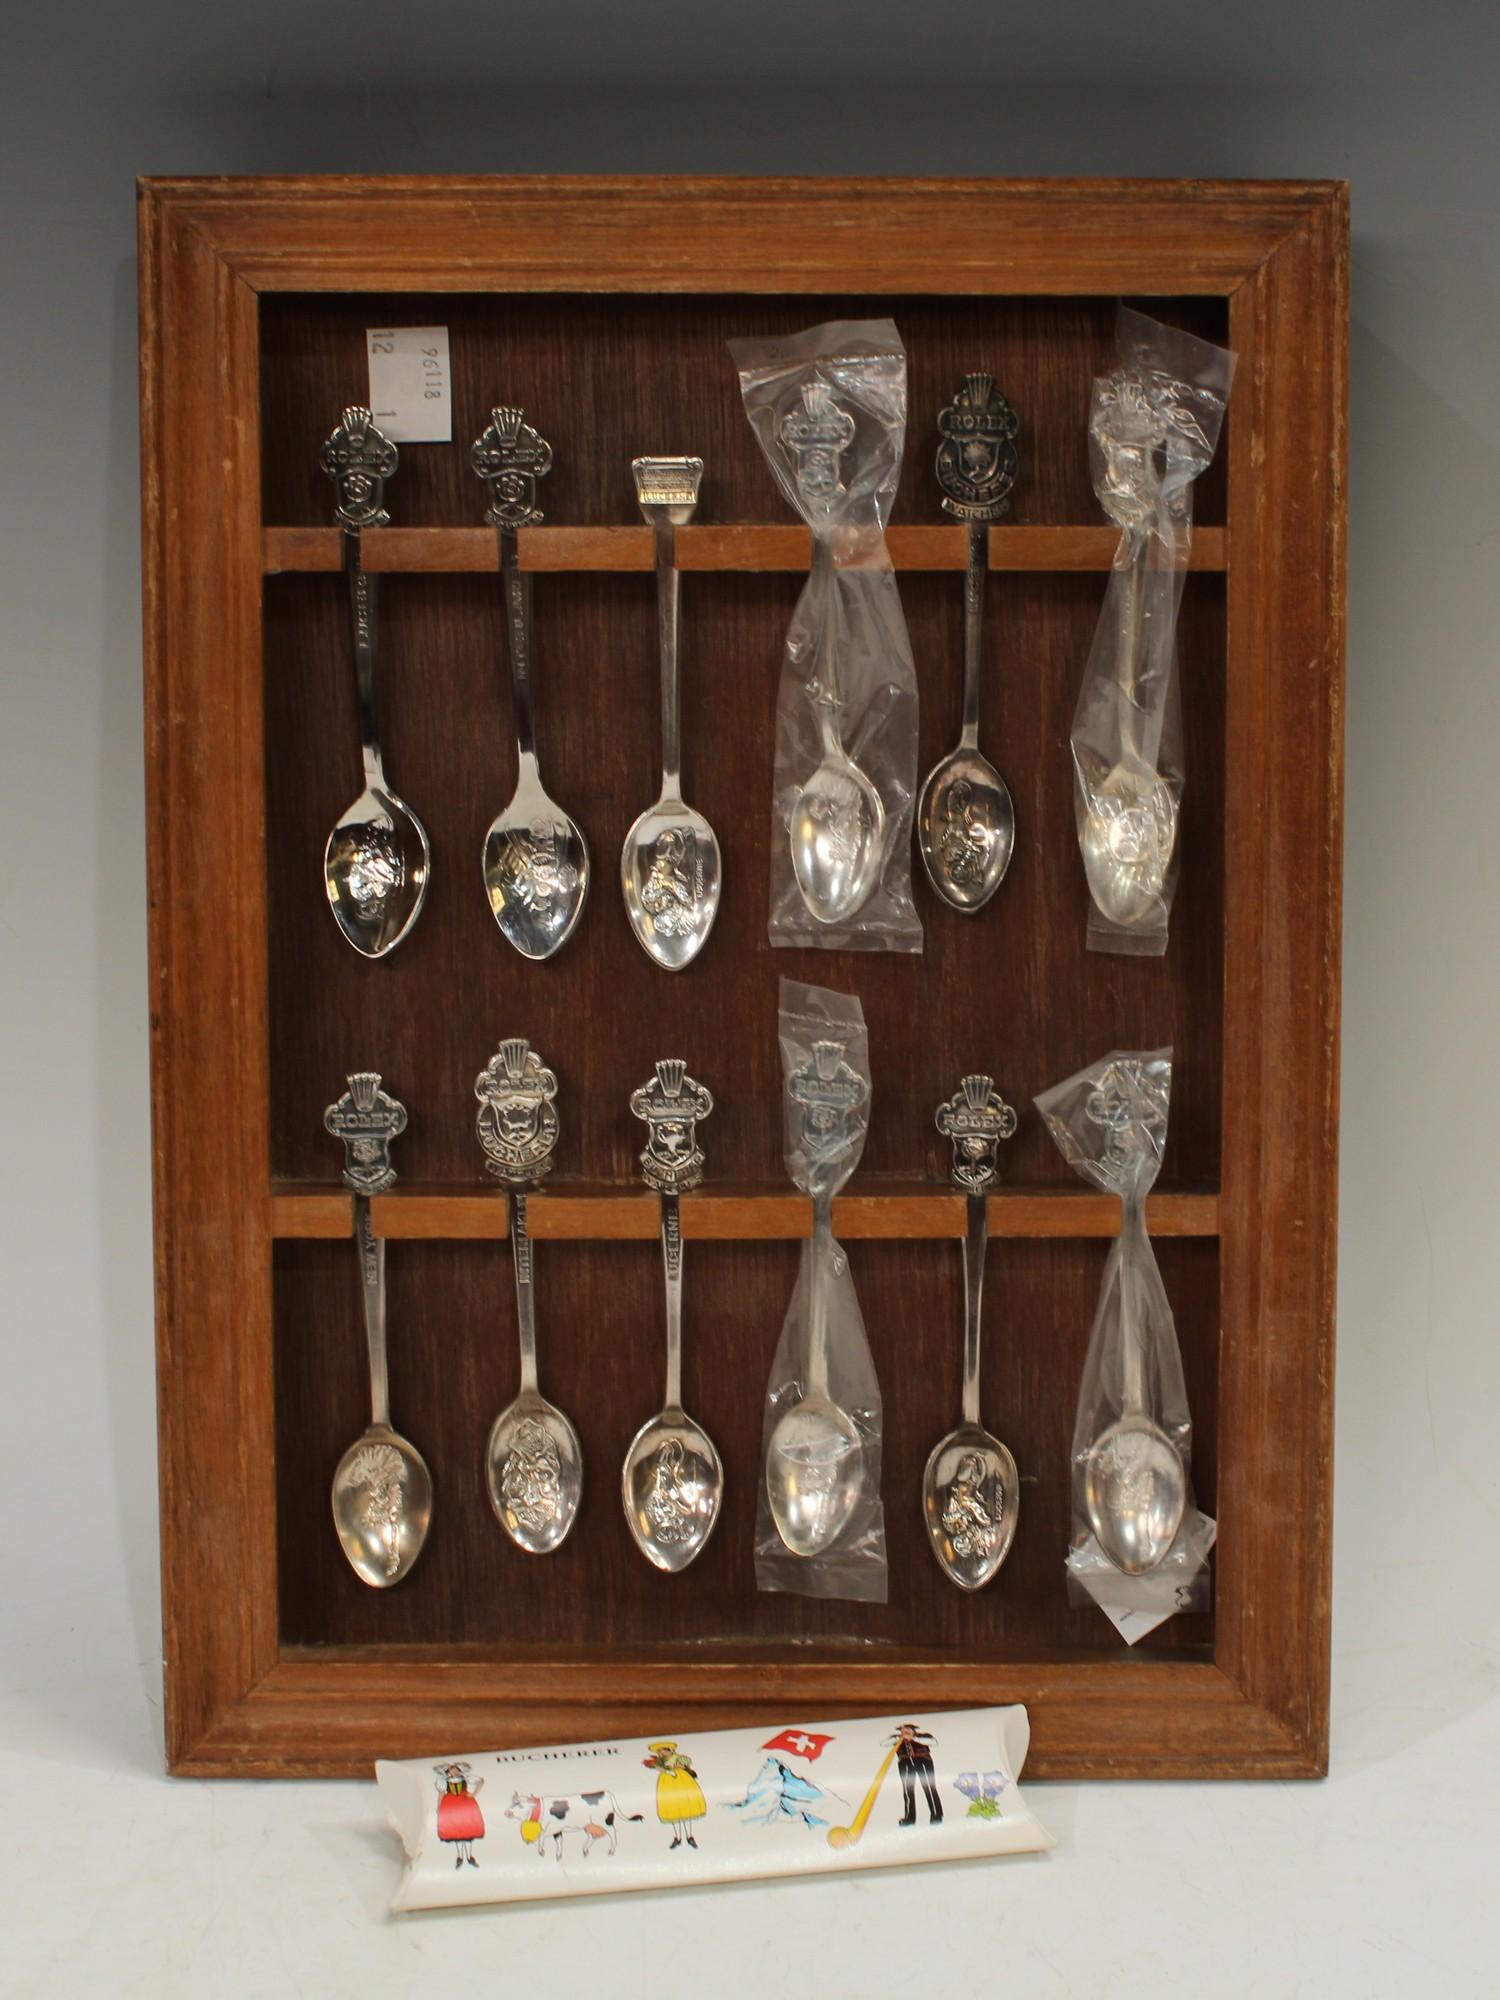 A set of thirteen Rolex base metal teaspoons, a wooden spoon rack